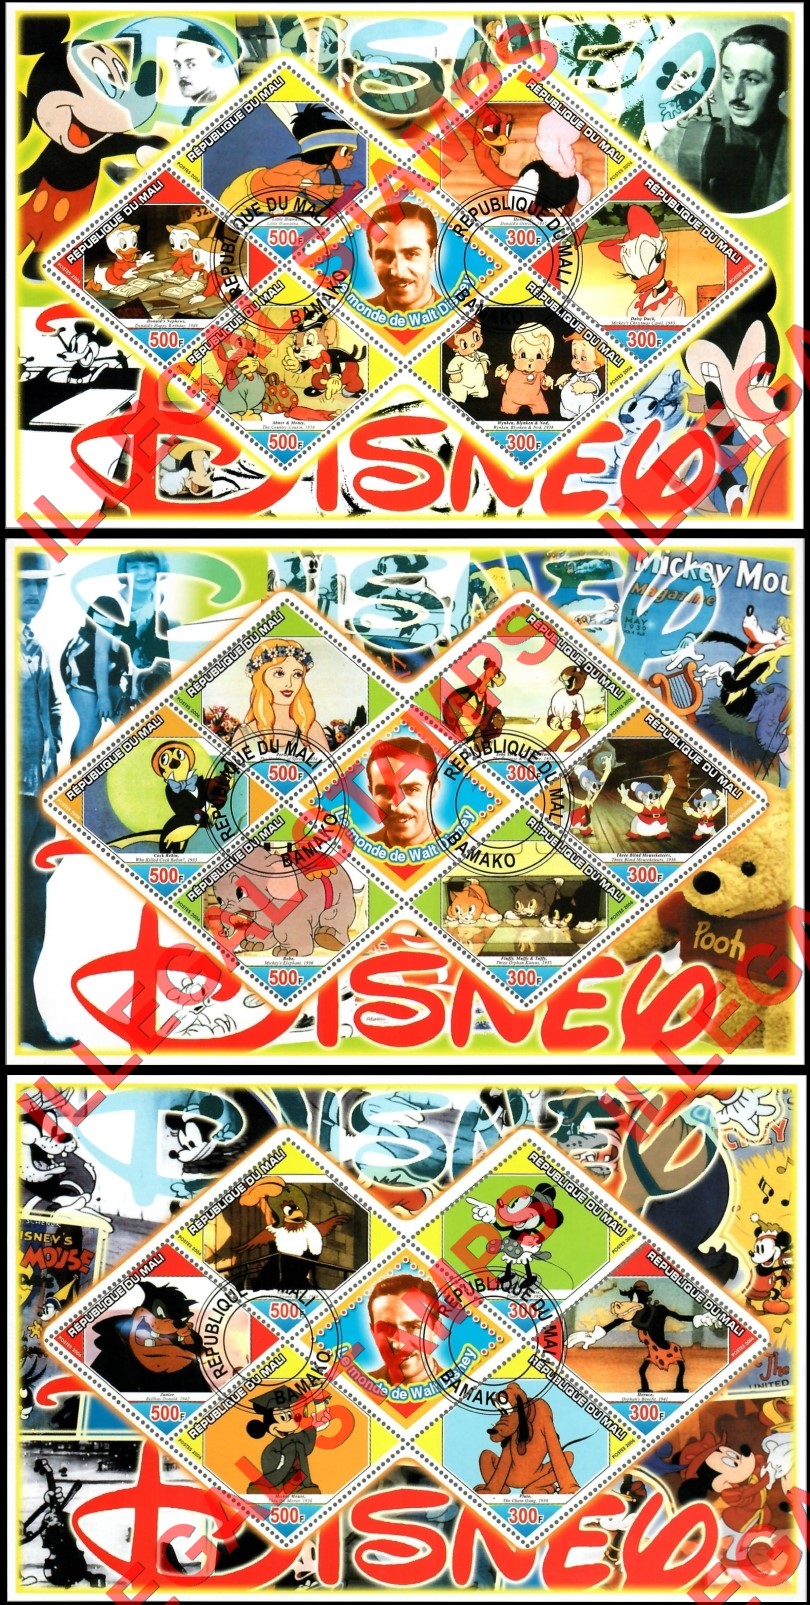 Mali 2006 Disney Cartoons Illegal Stamp Souvenir Sheets of 6 Plus Label (Part 1)